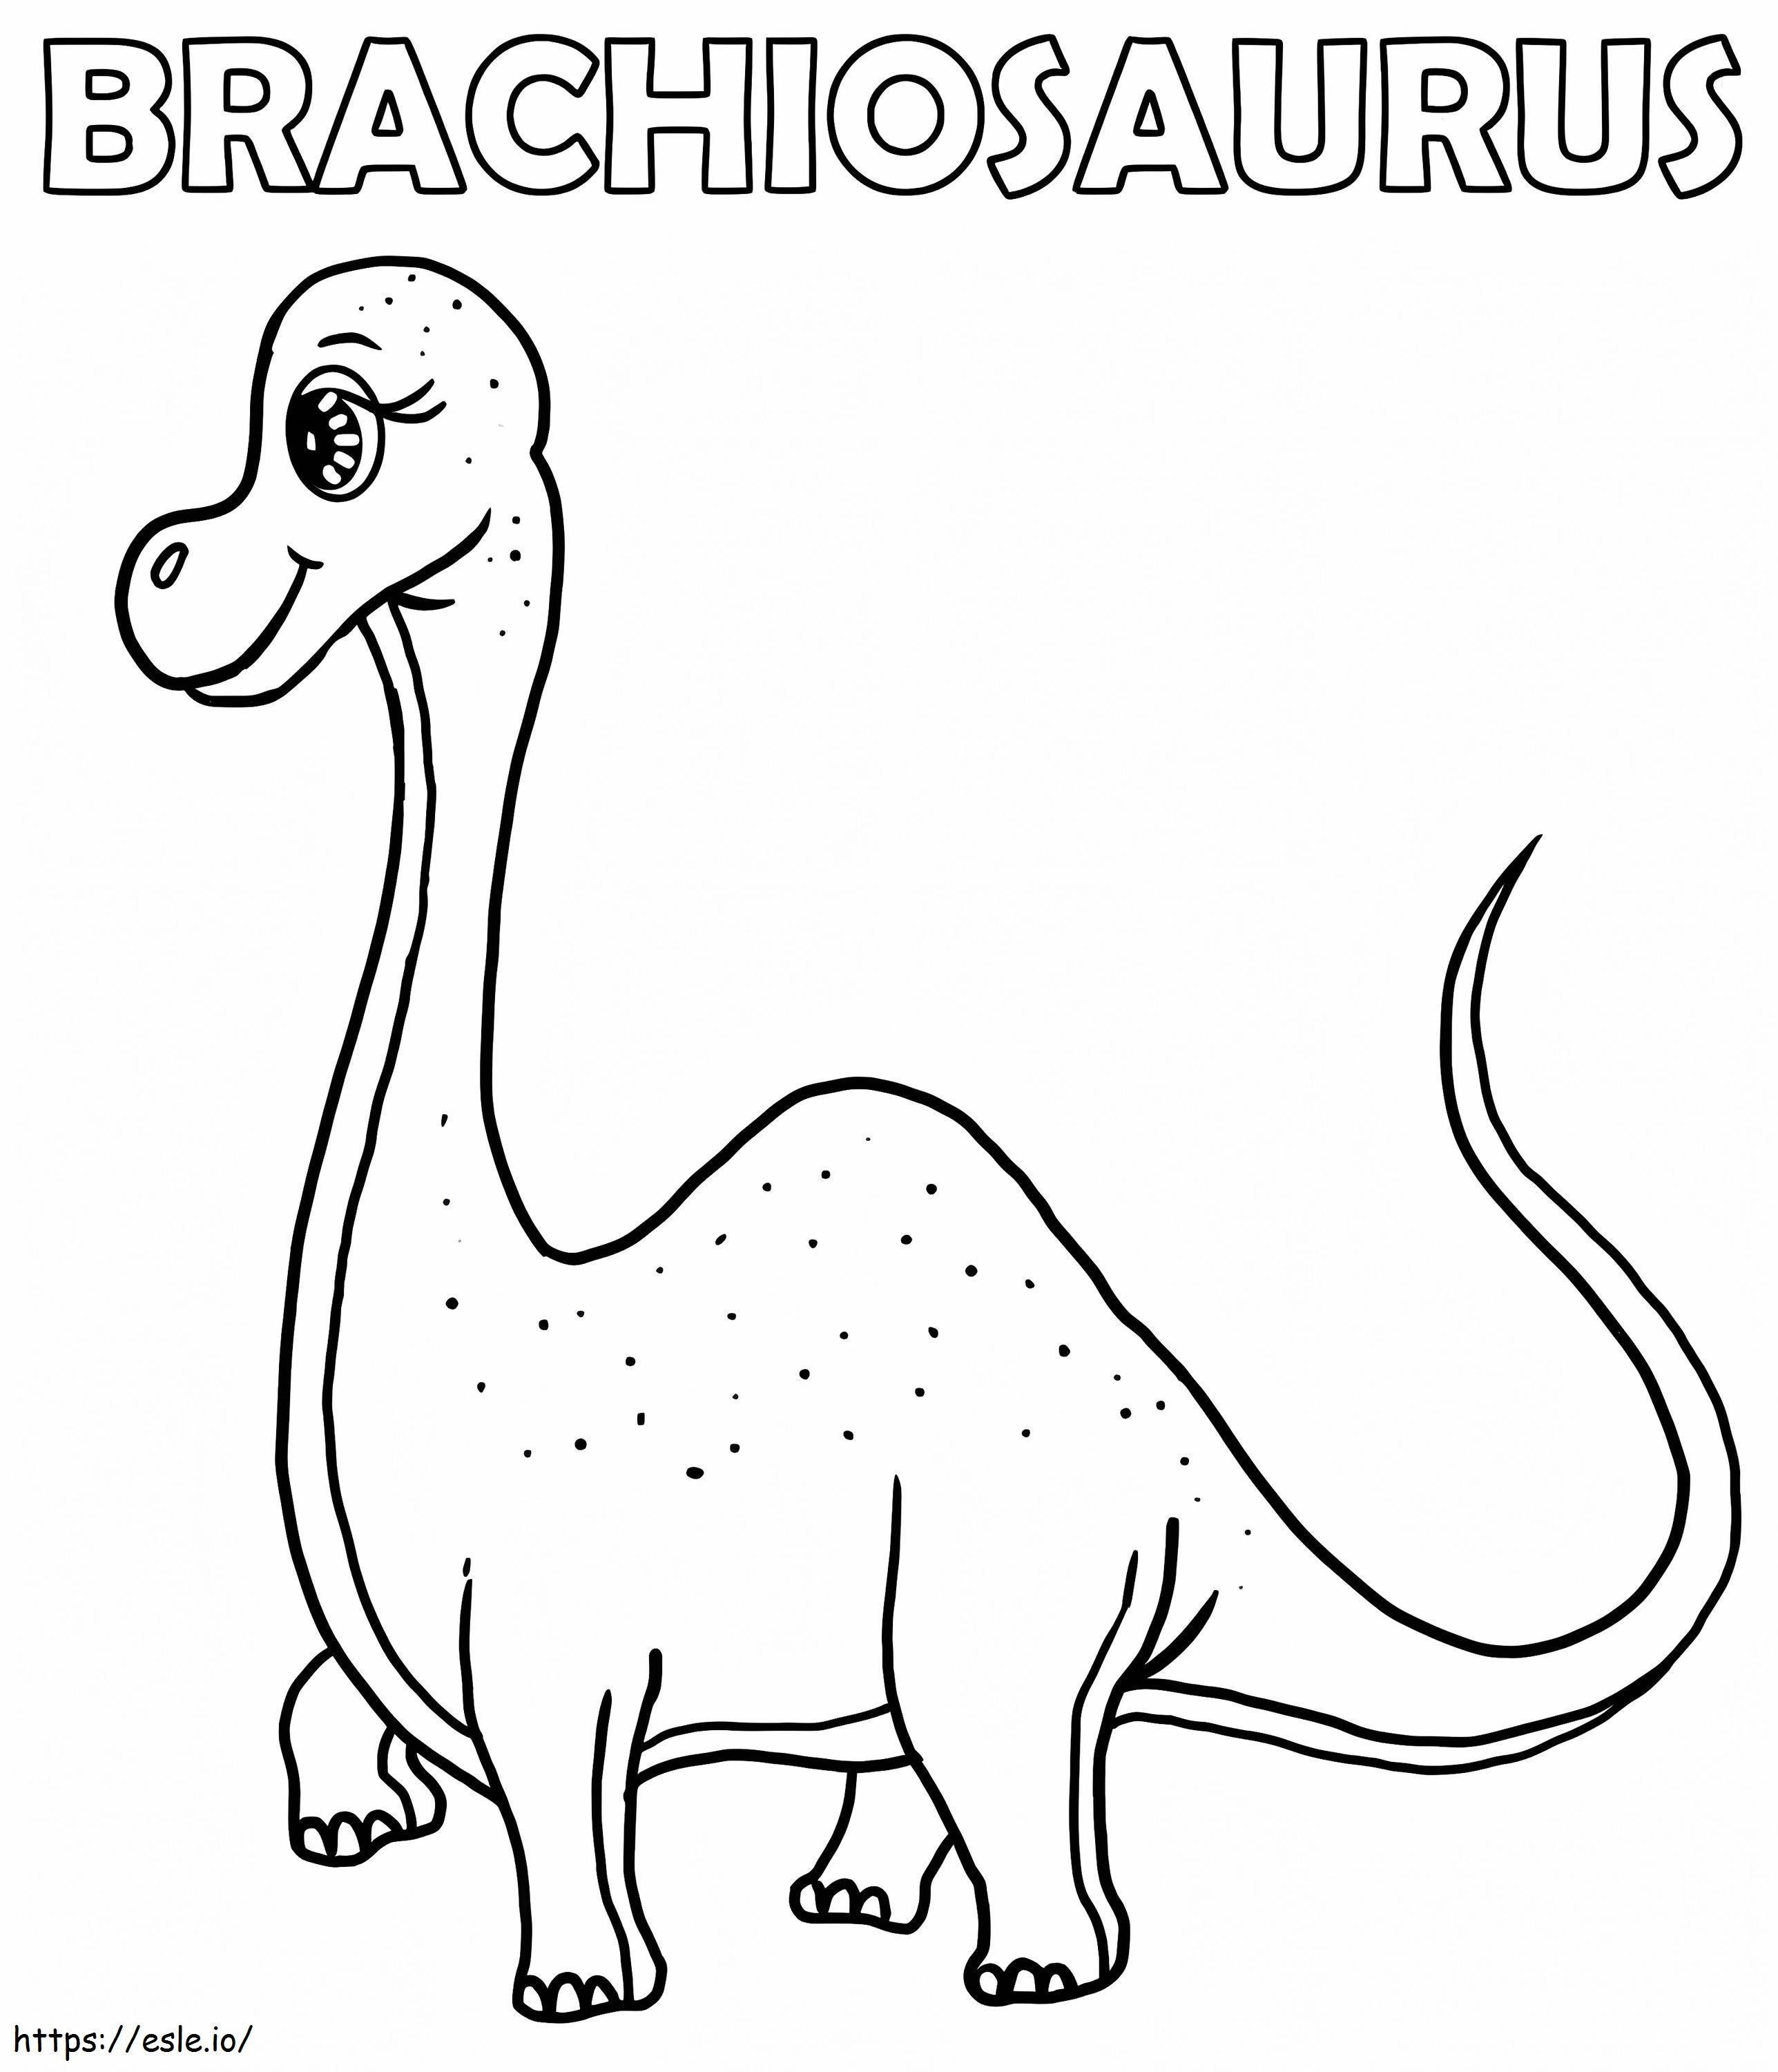 Mooie Brachiosaurus kleurplaat kleurplaat